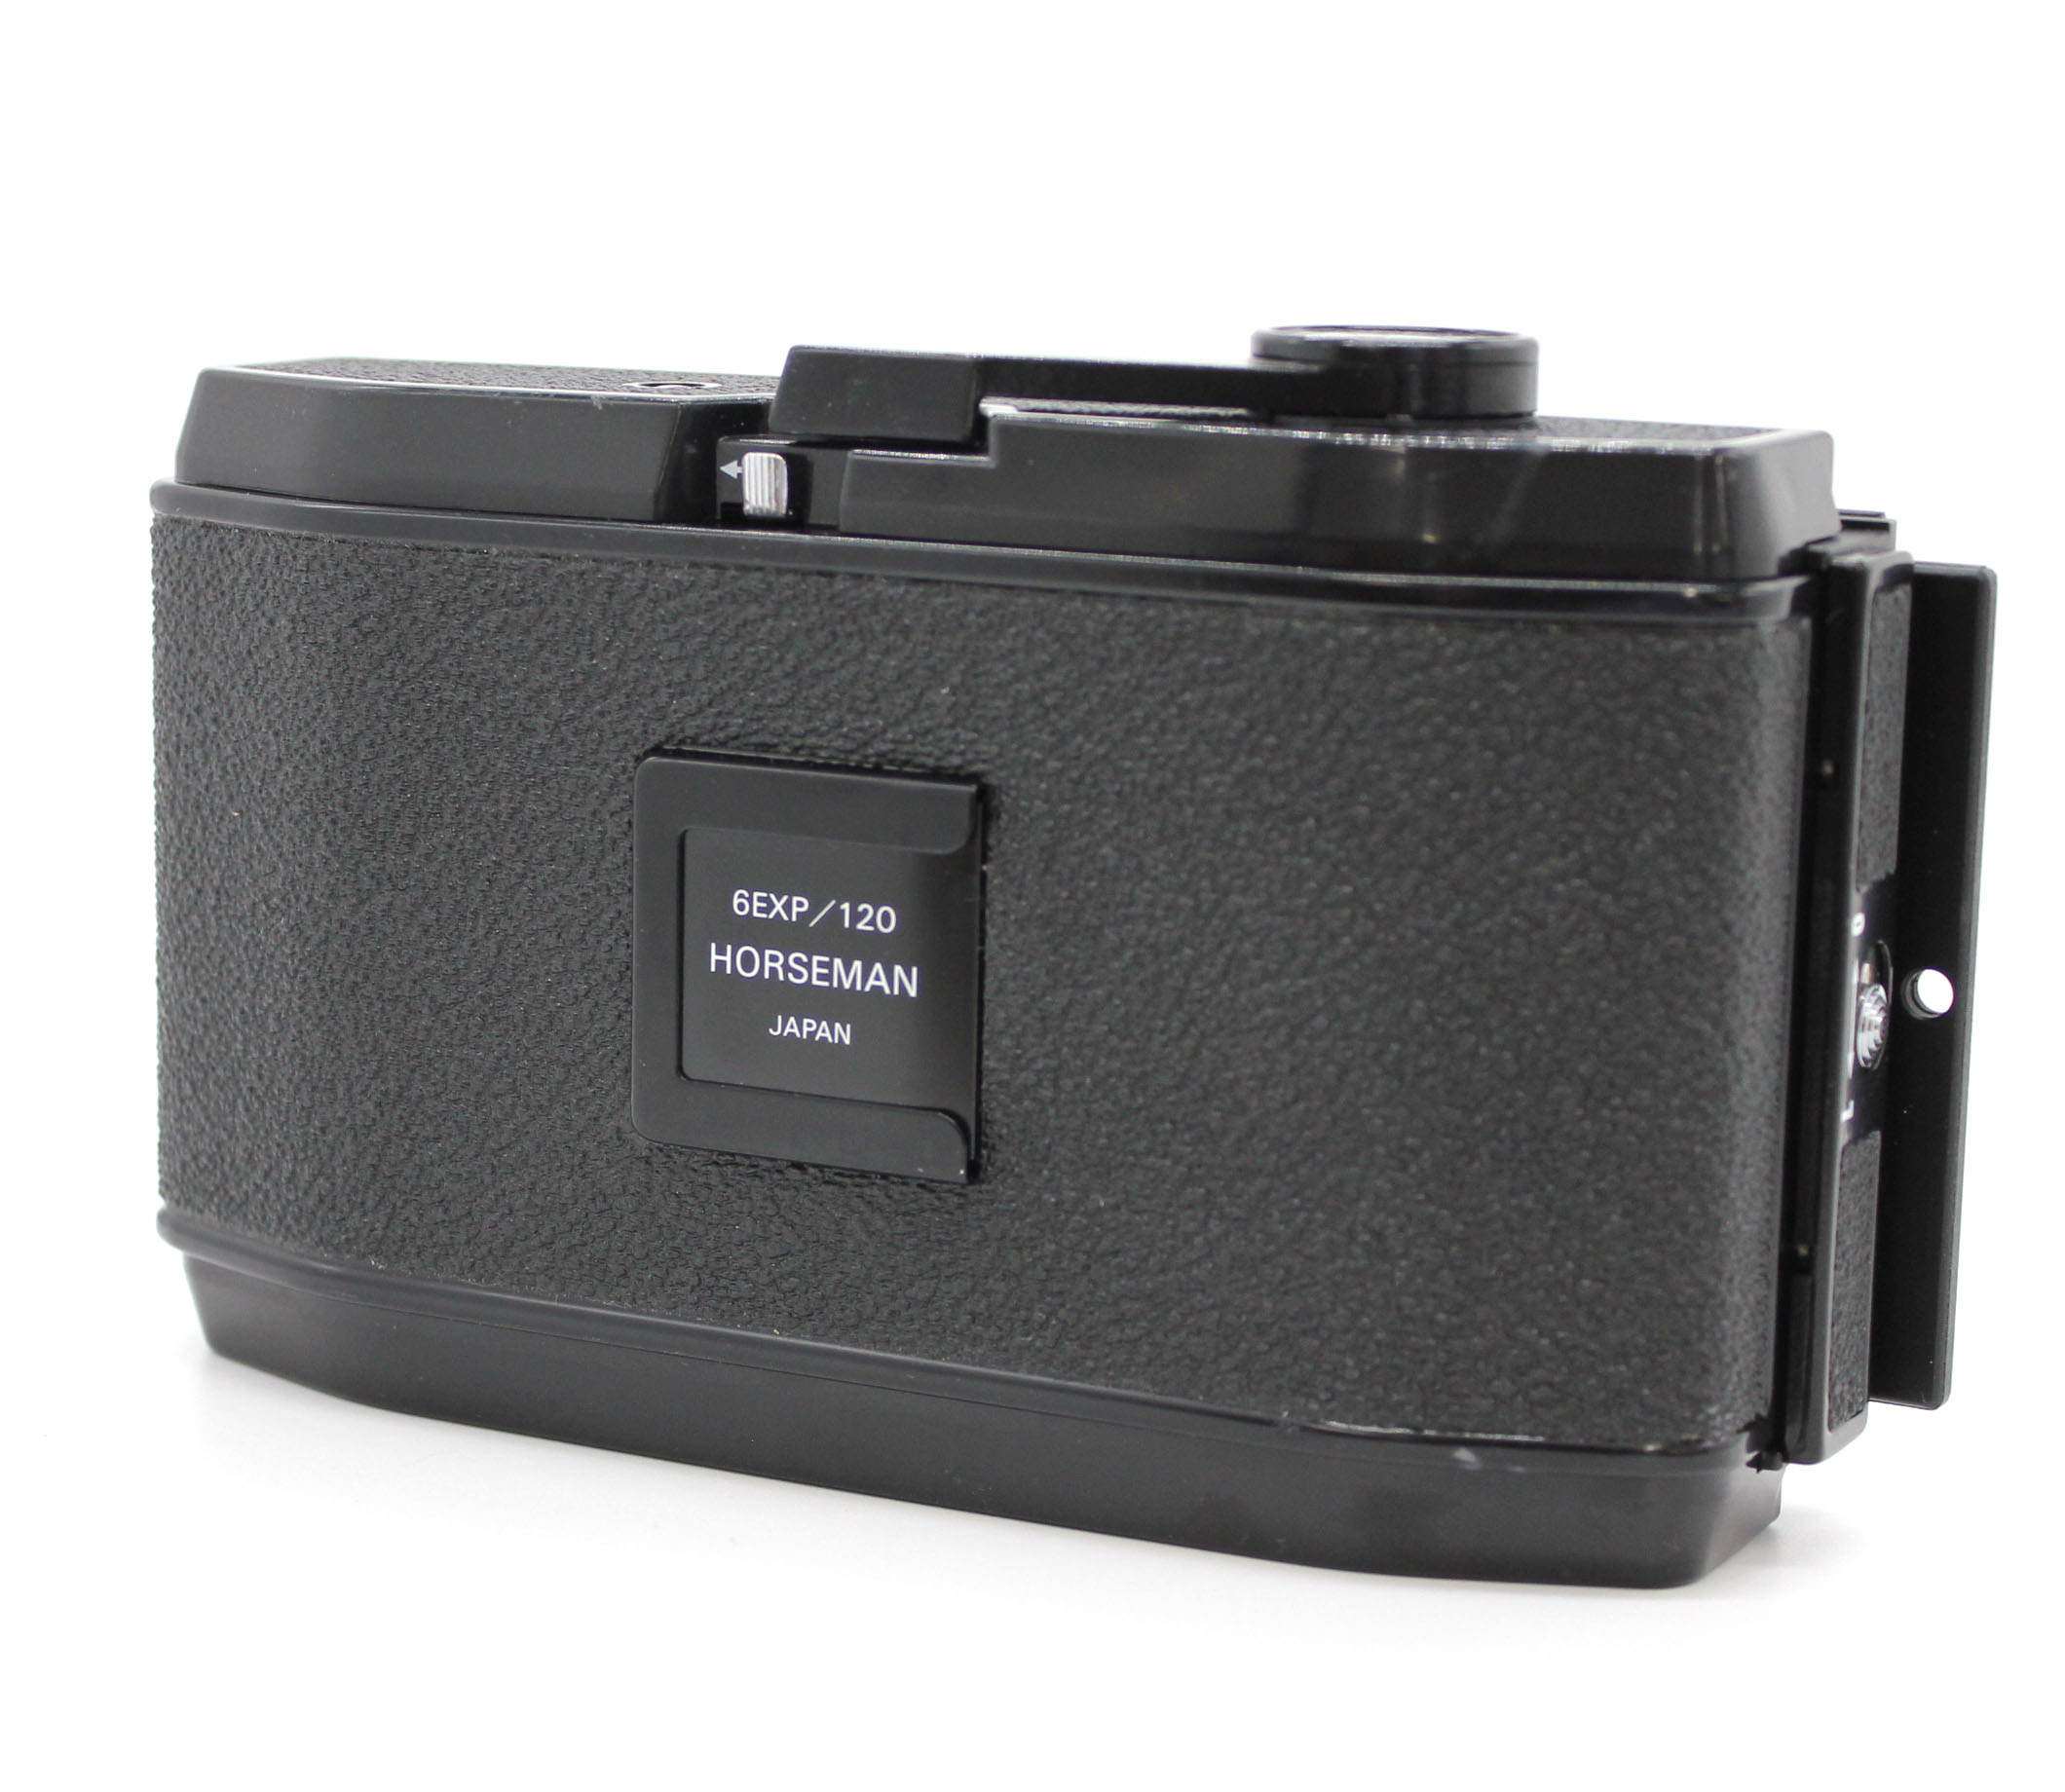 Japan Used Camera Shop | [Near Mint] Horseman SW Roll Film Holder 6EXP/120 6x12 for Horseman SW612 from Japan